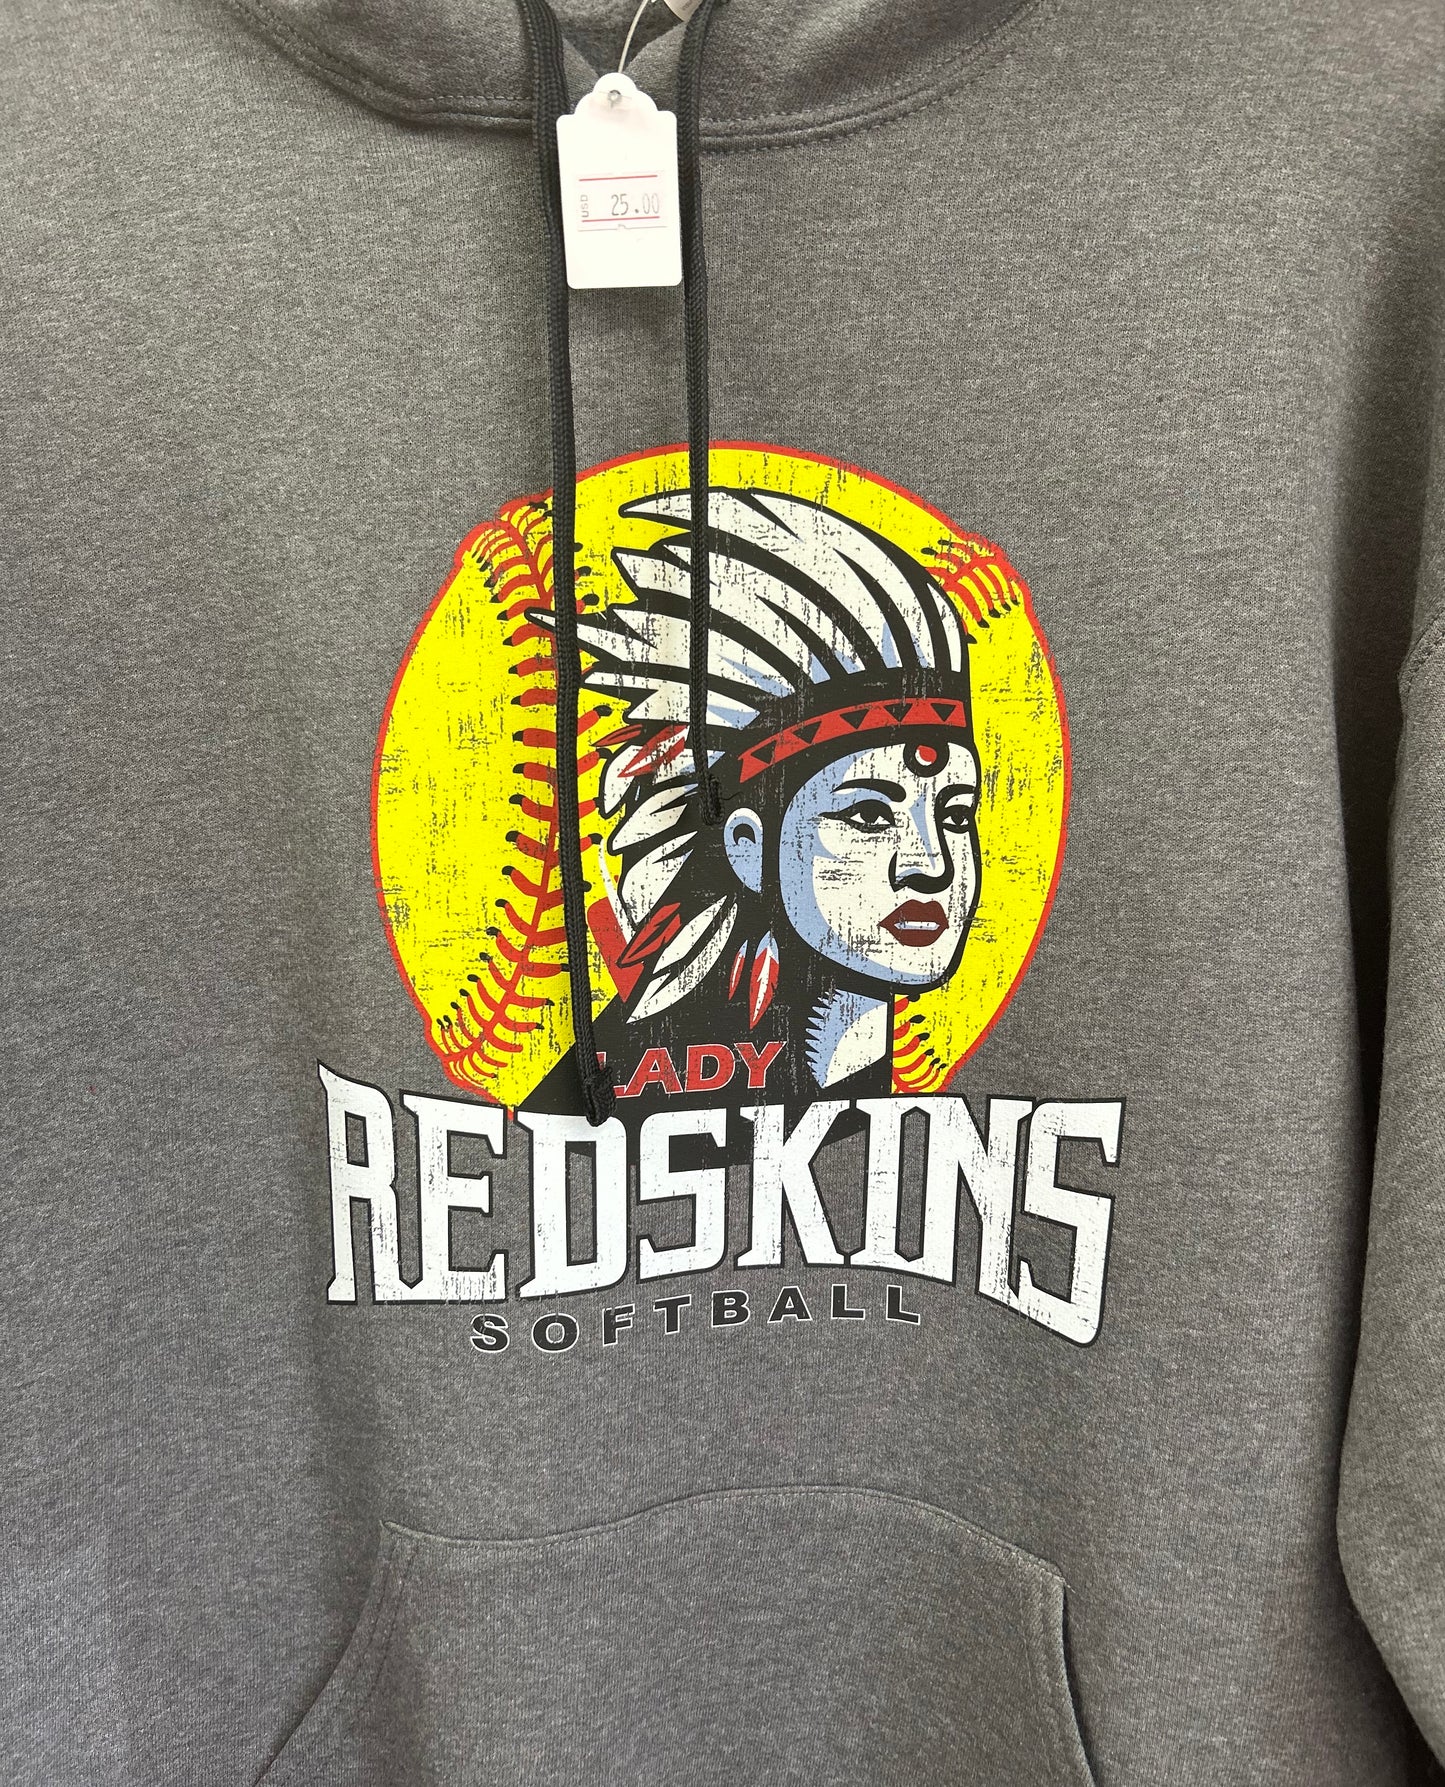 Knox Lady Redskins SOFTBALL Hoodie - Dk Grey - Adult / Youth Sizes Hooded Sweatshirt